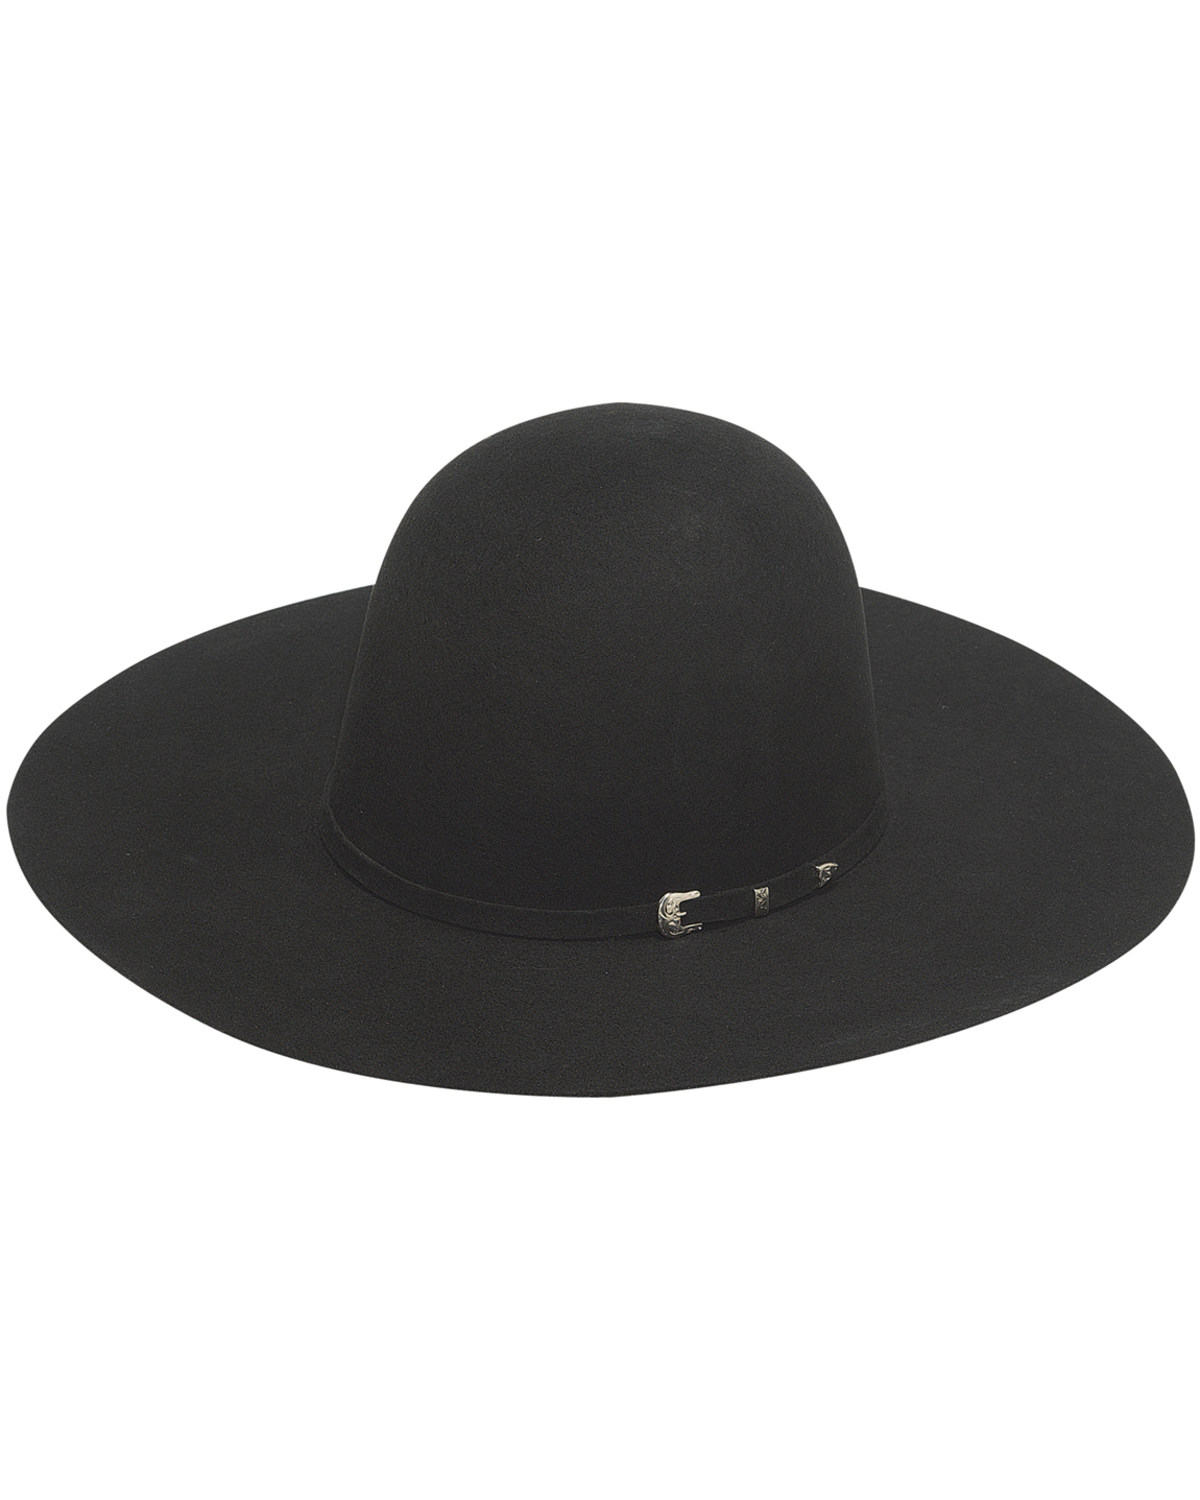 Twister Select 2X Felt Cowboy Hat